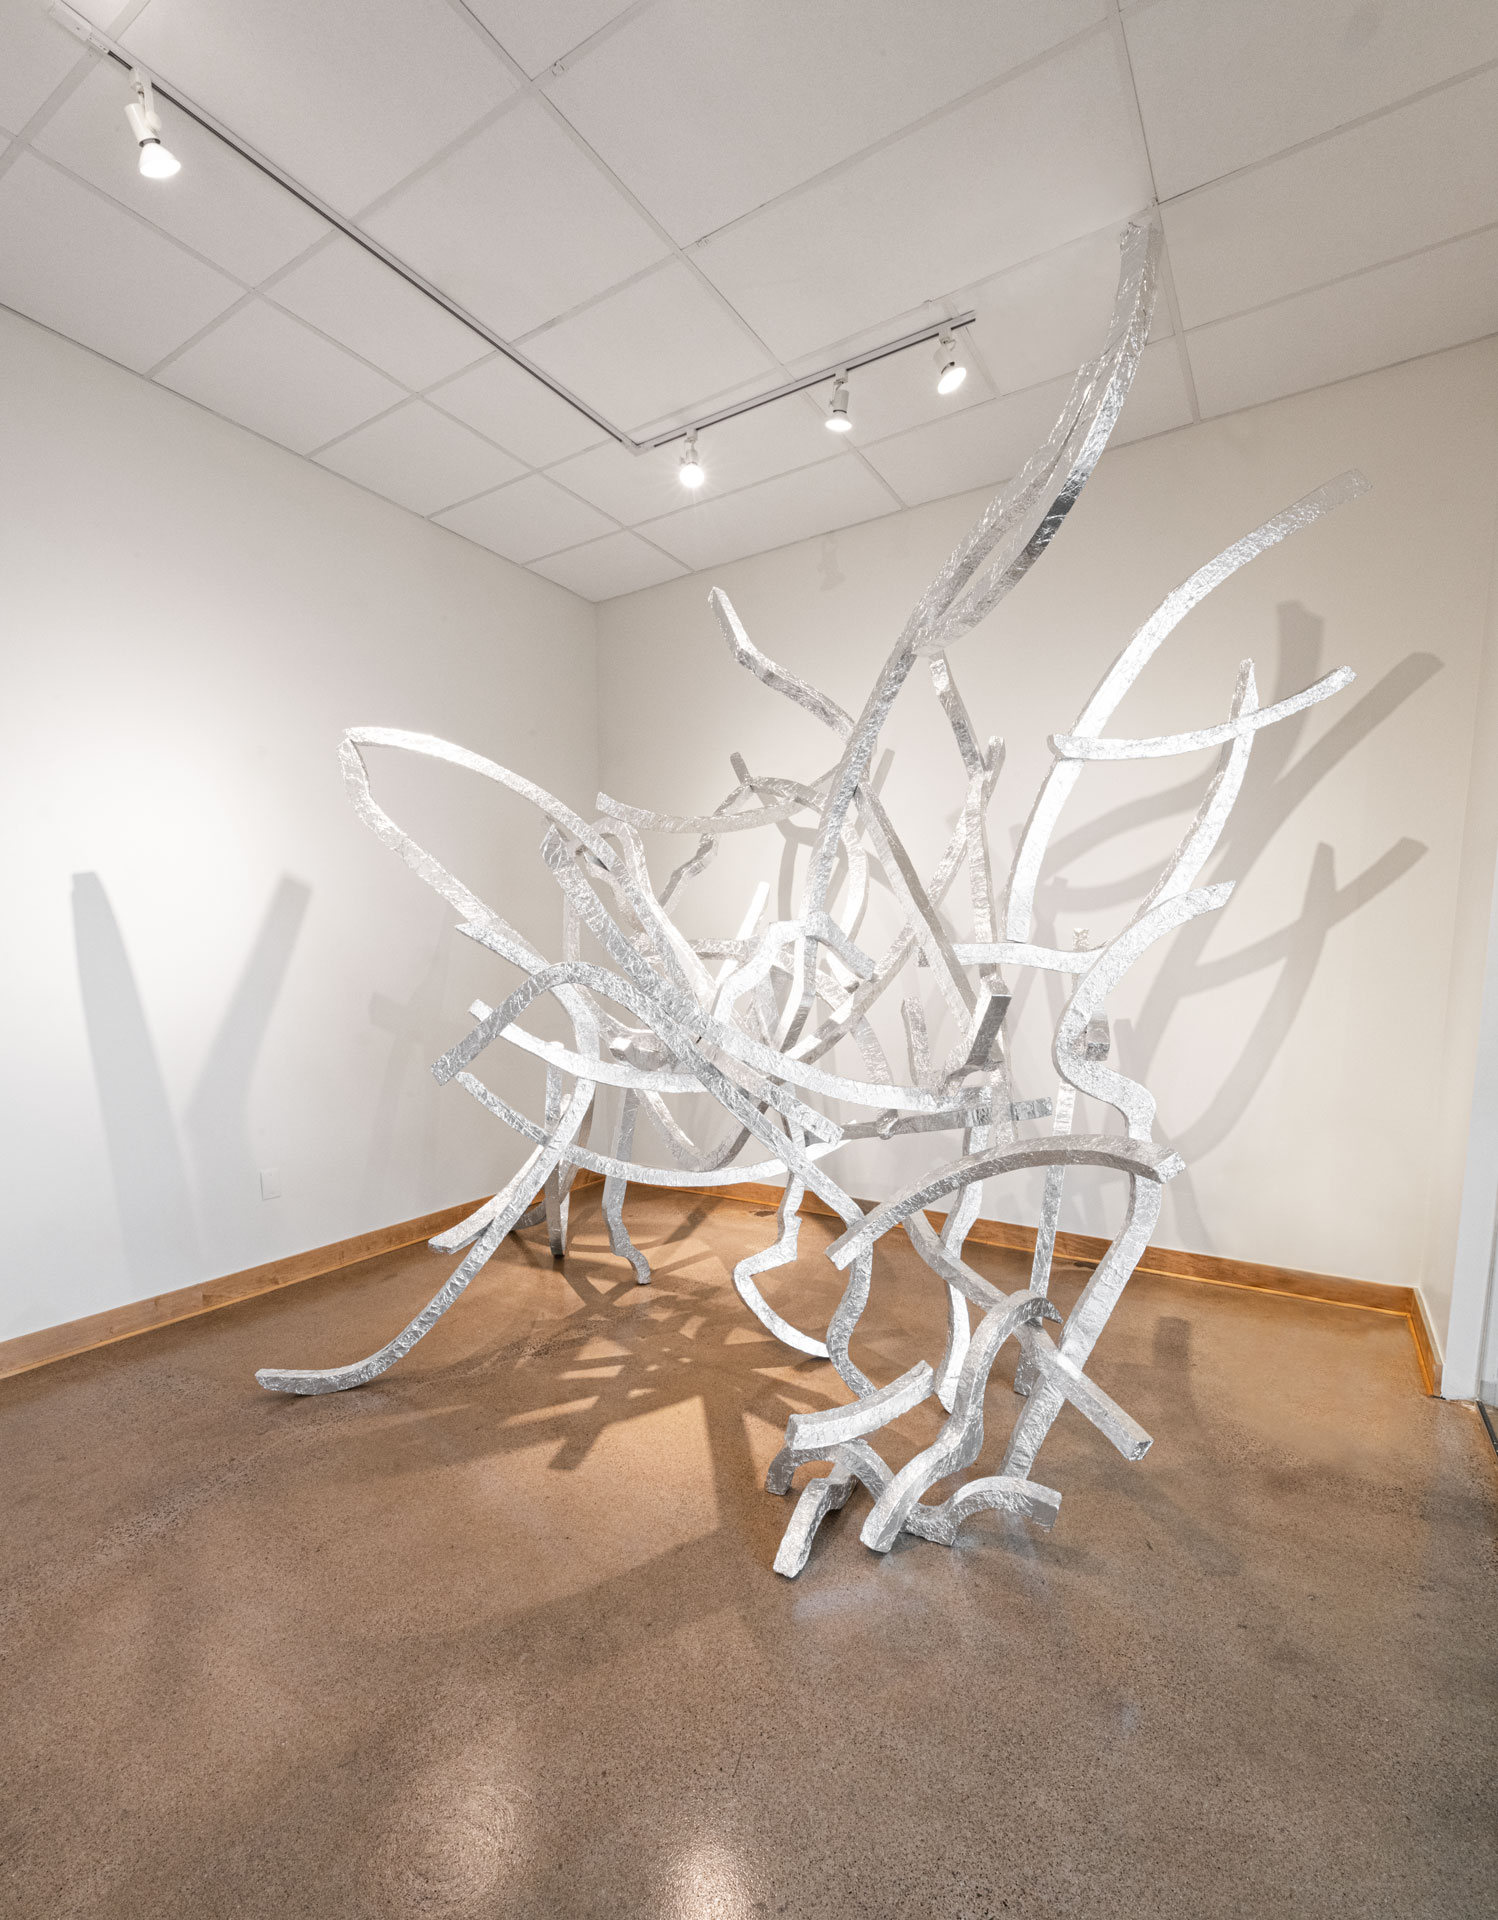 Scottie Burgess installation art abstract sculpture dynamic tinfoil